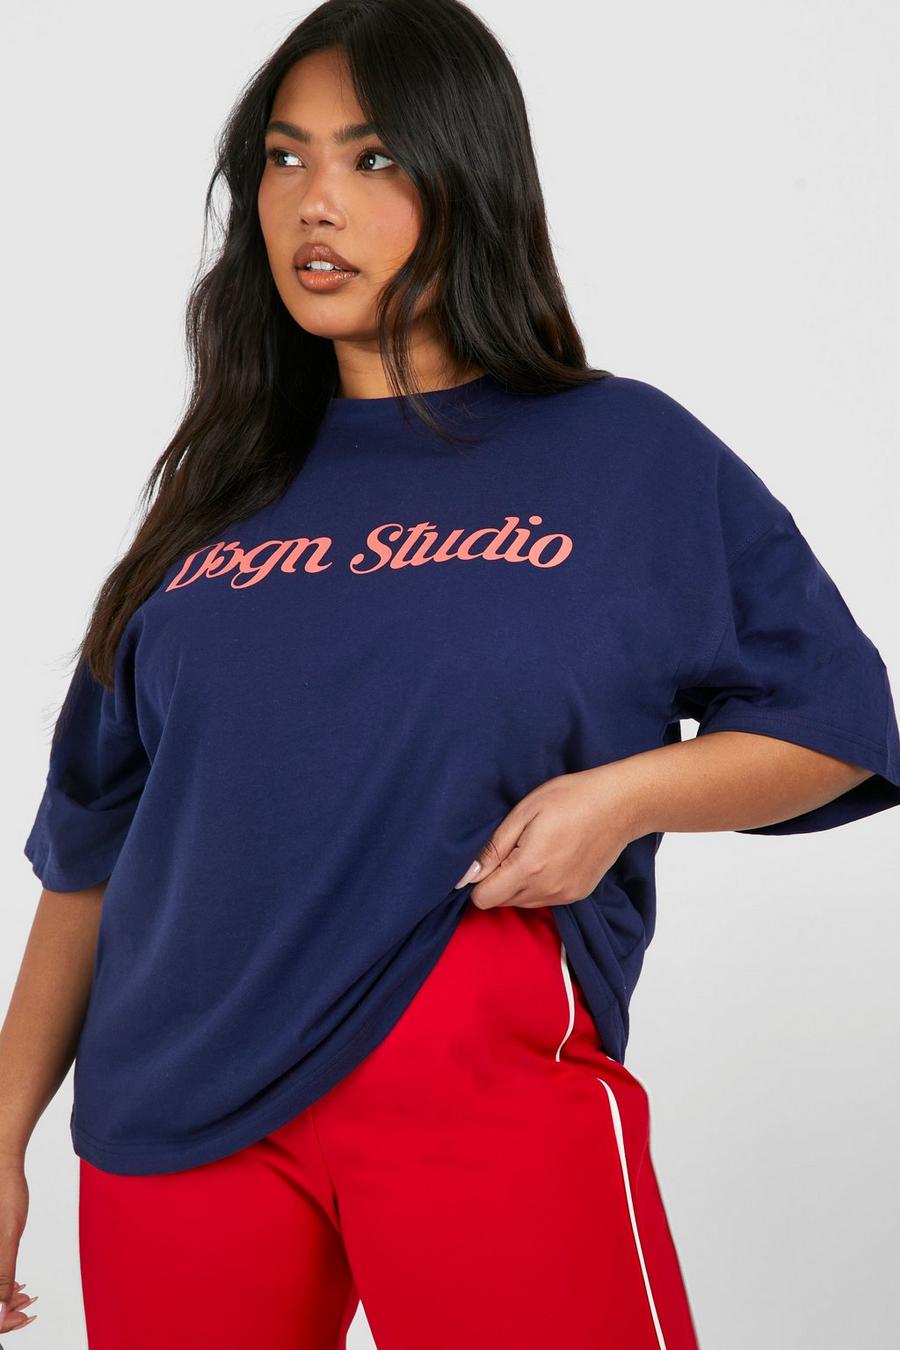 Grande taille - T-shirt oversize à slogan Dsgn Studio, Navy